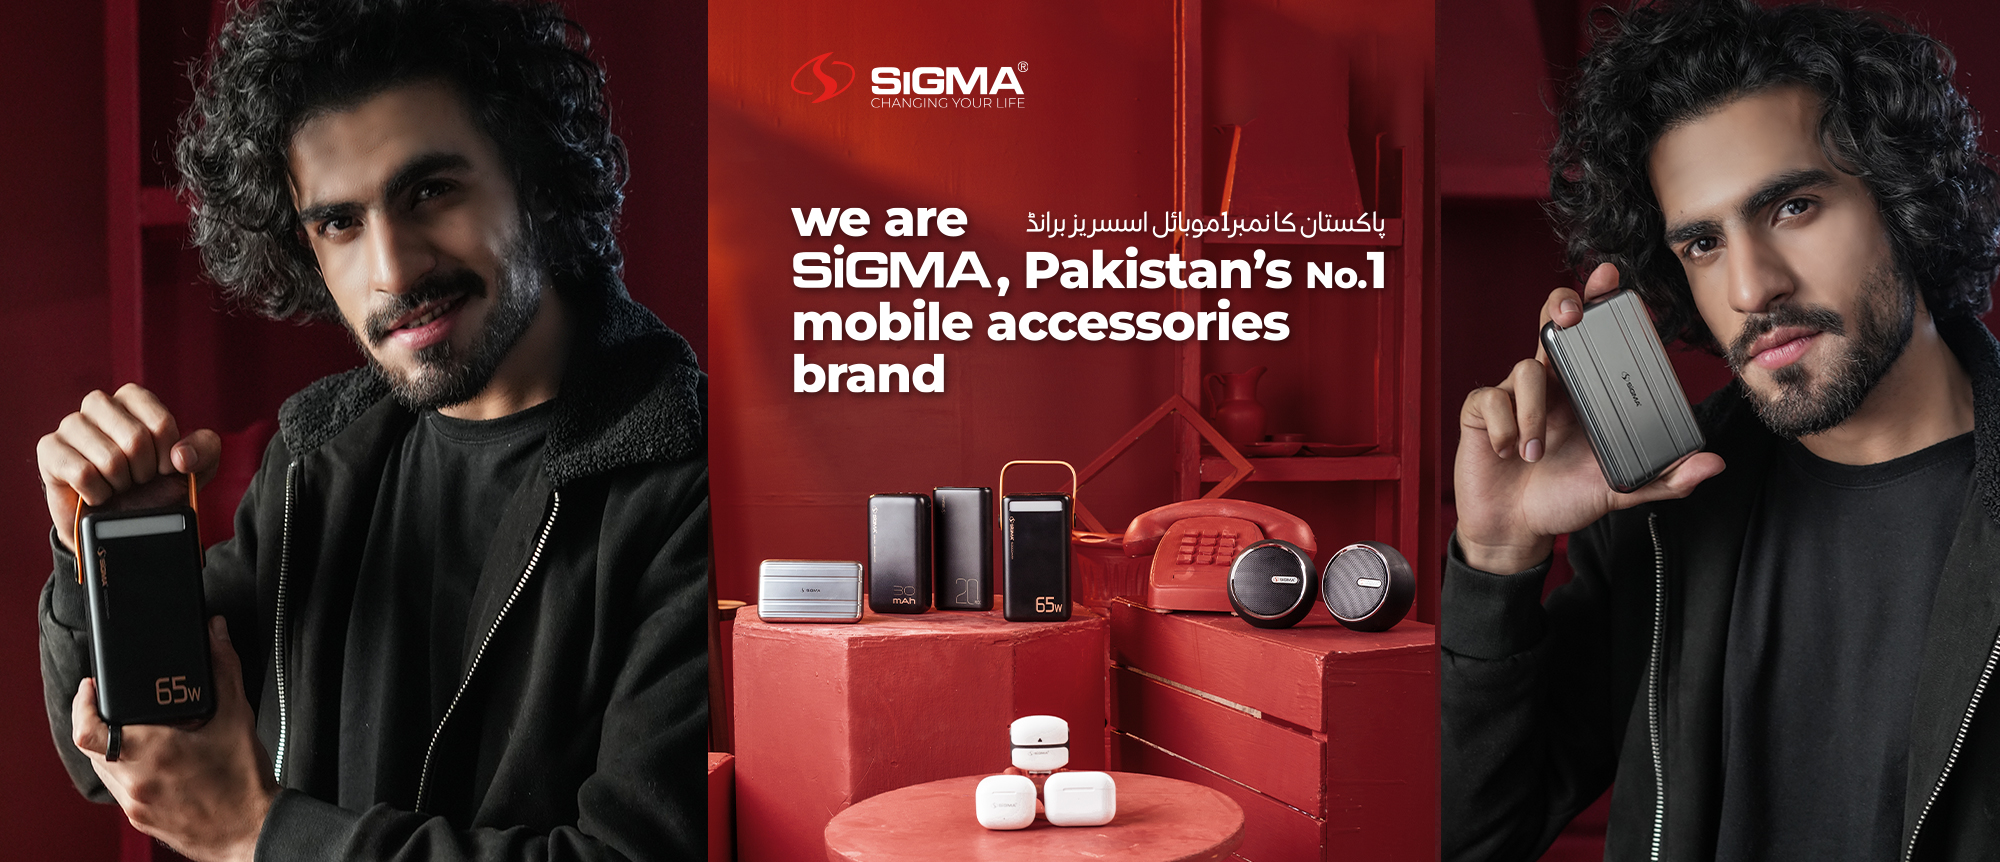 Pakistan's No.1 mobile accessories brand